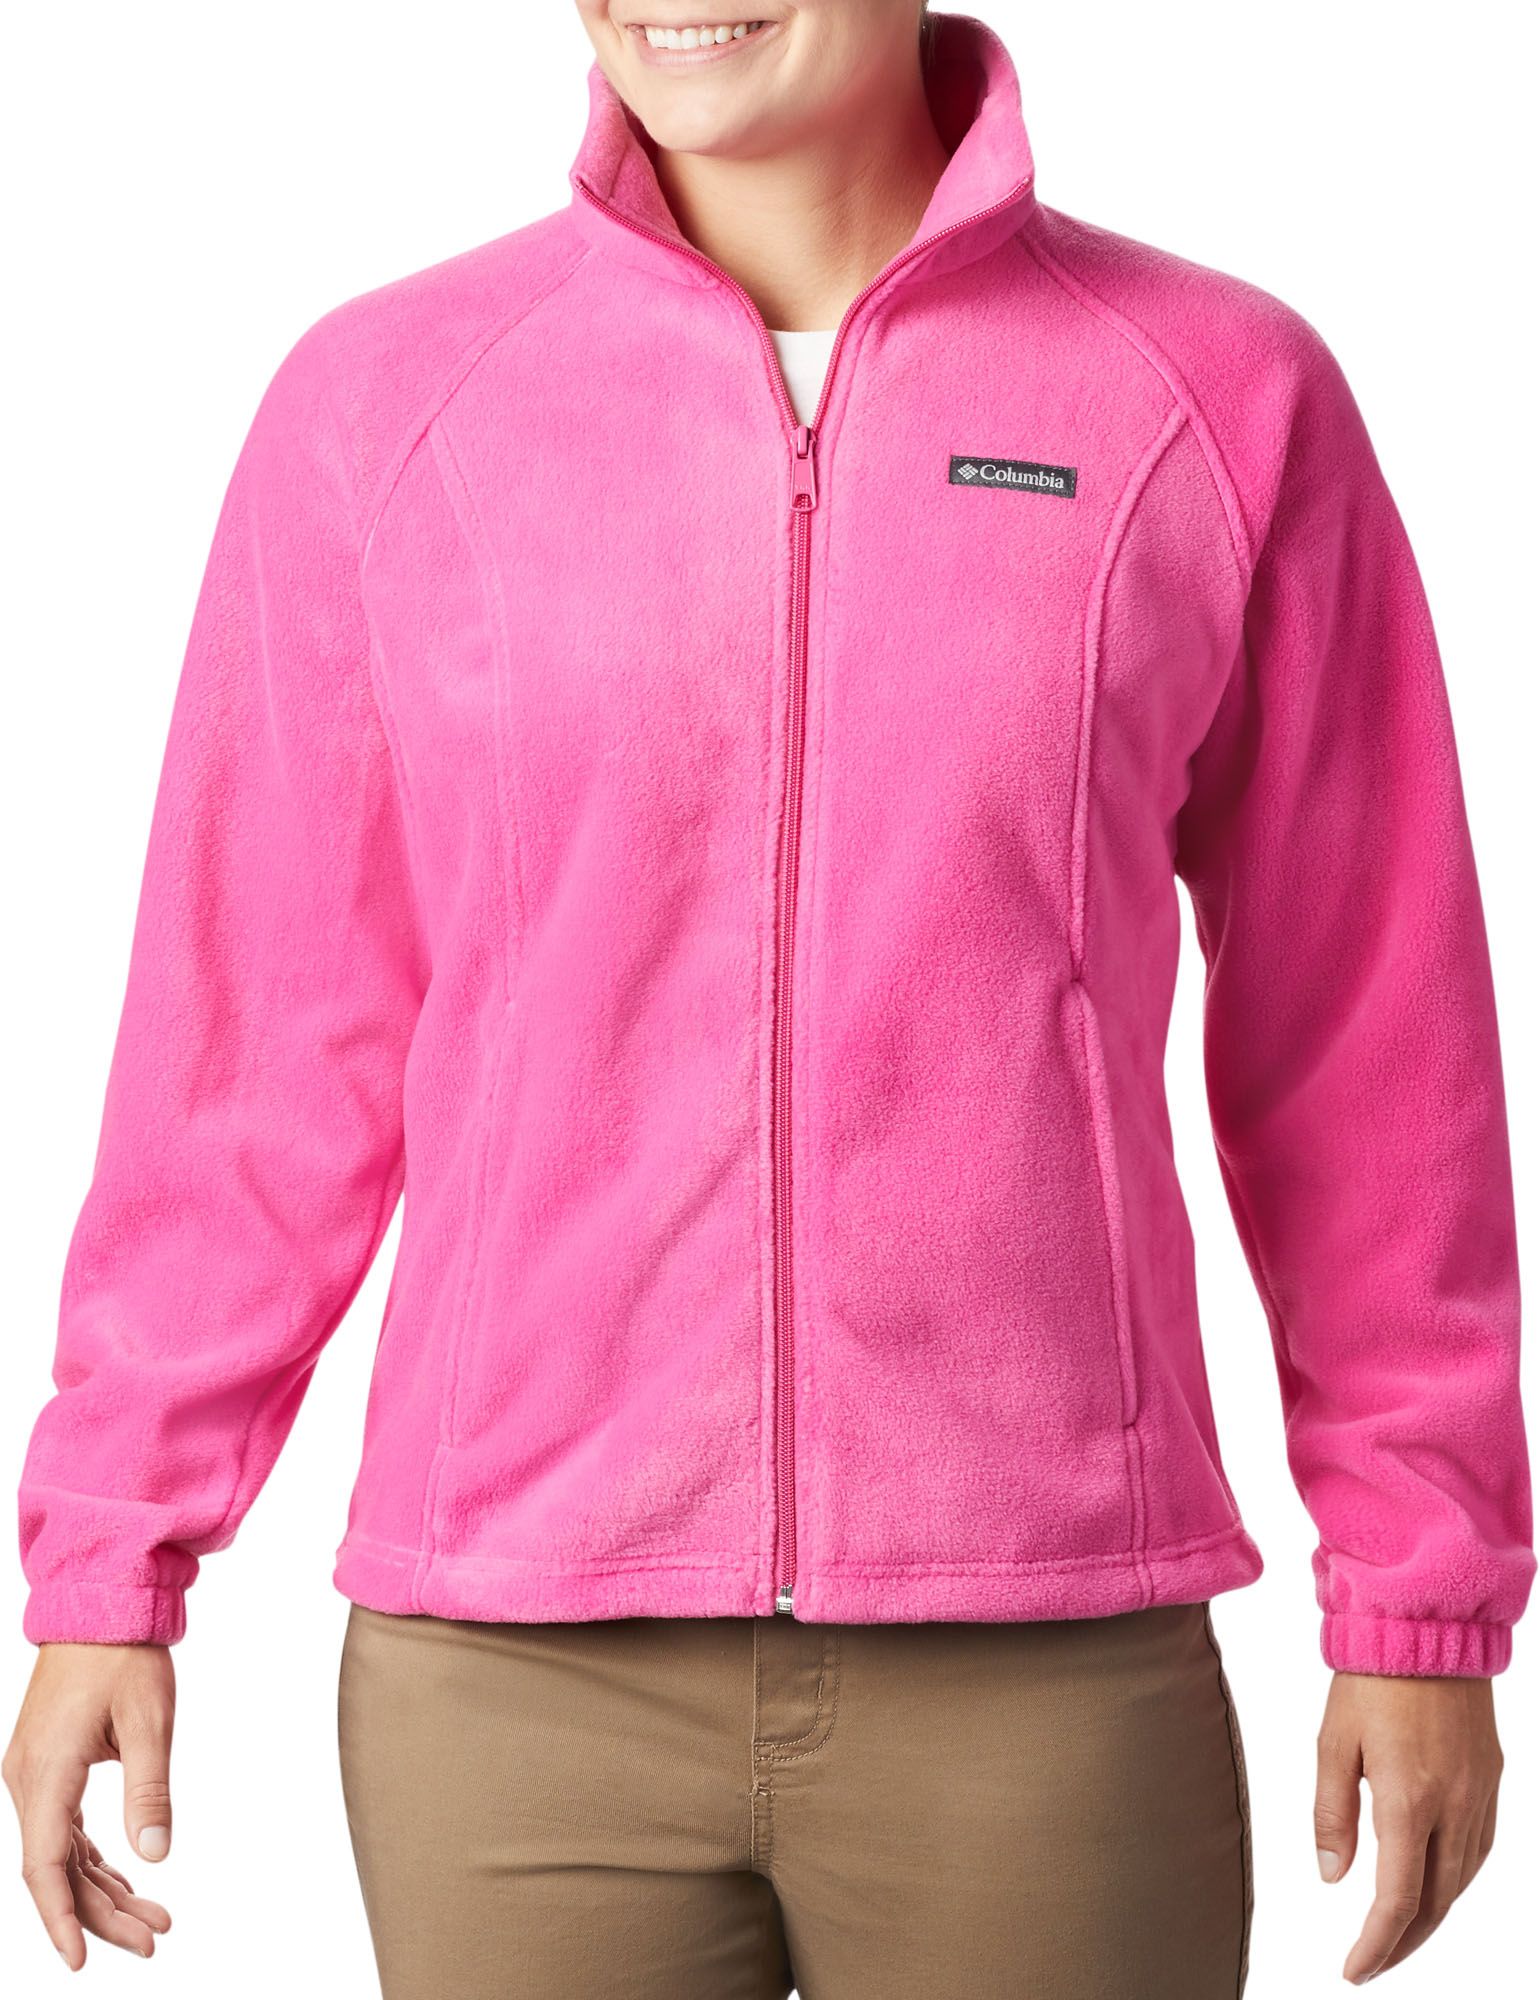 pink and black columbia jacket